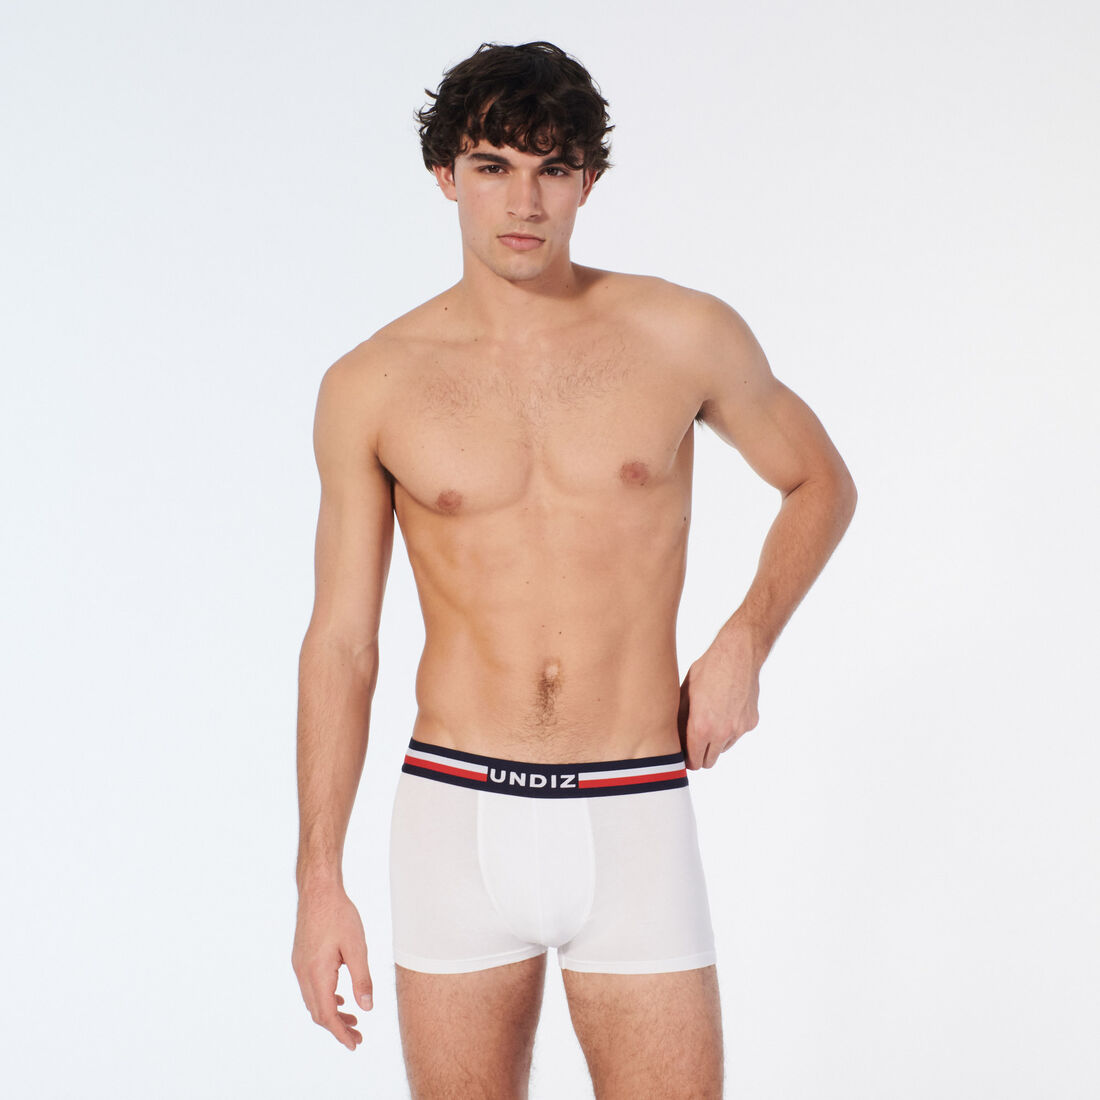 cotton striped elastic boxer shorts;